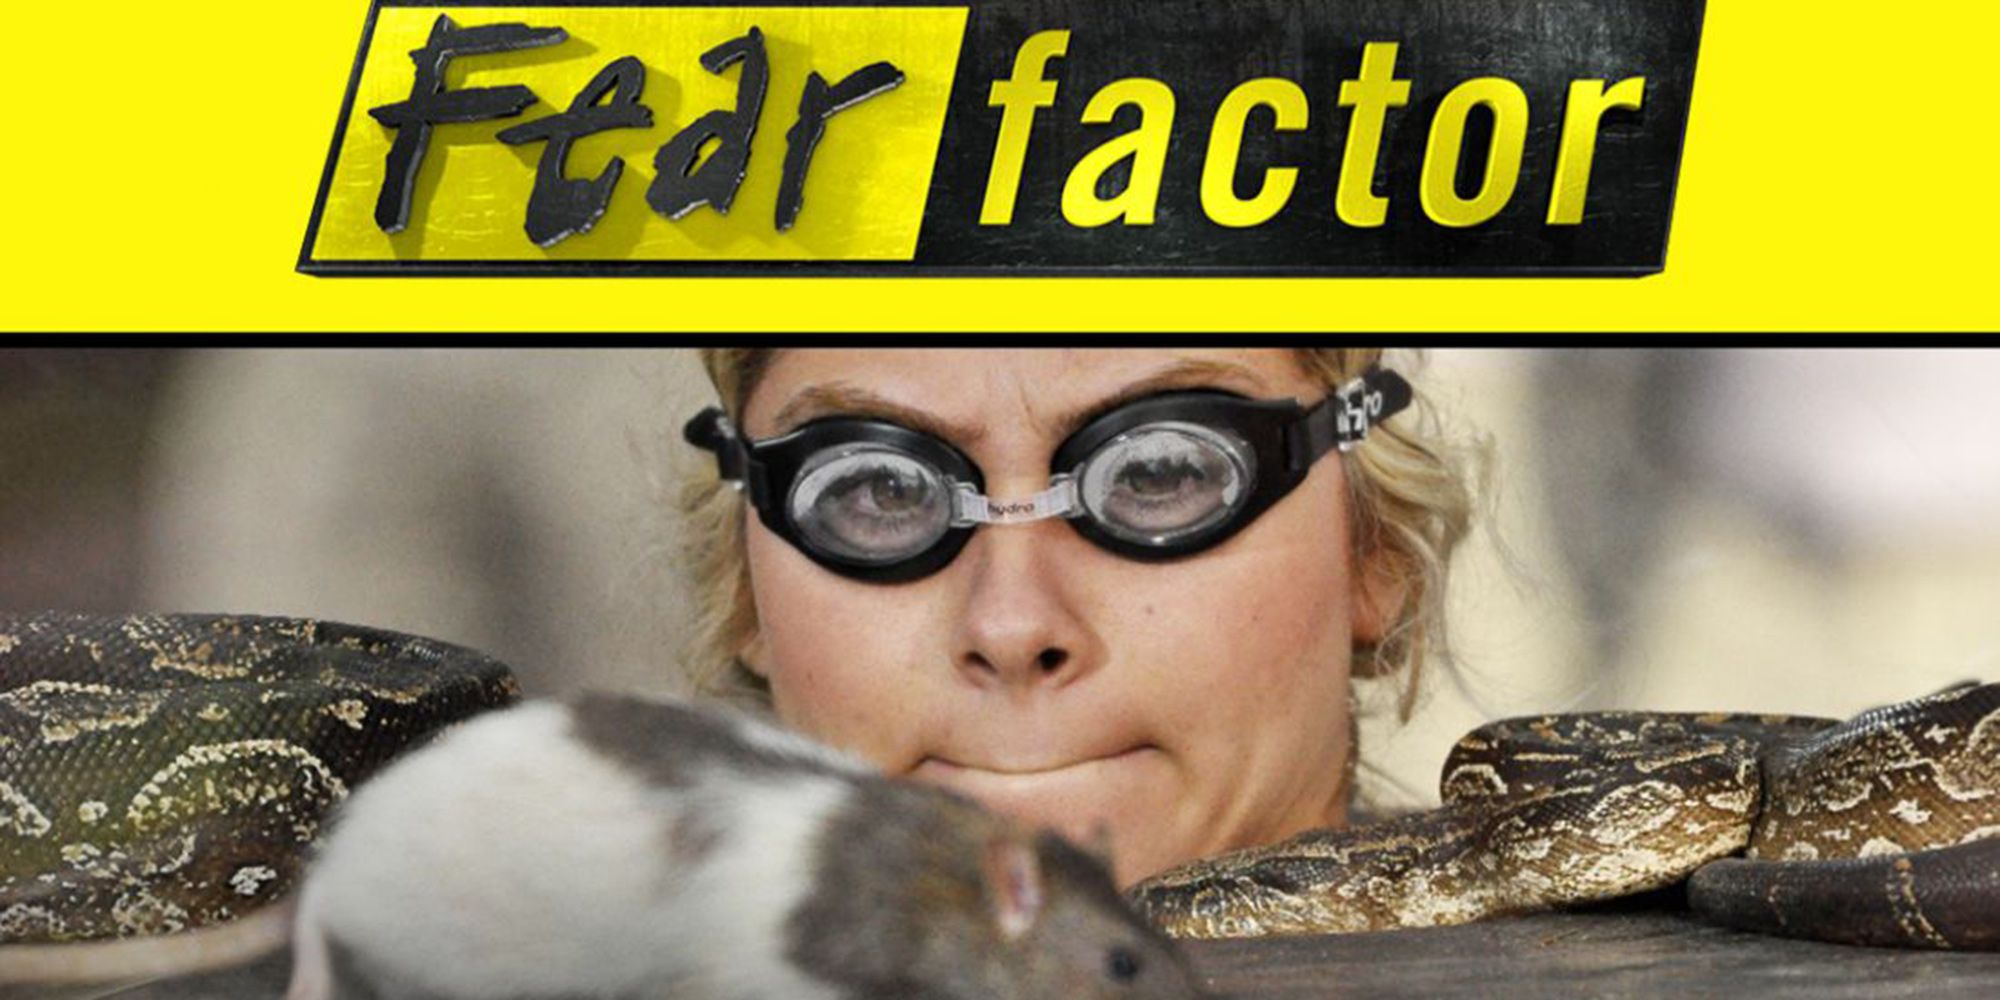 FEAR FACTOR